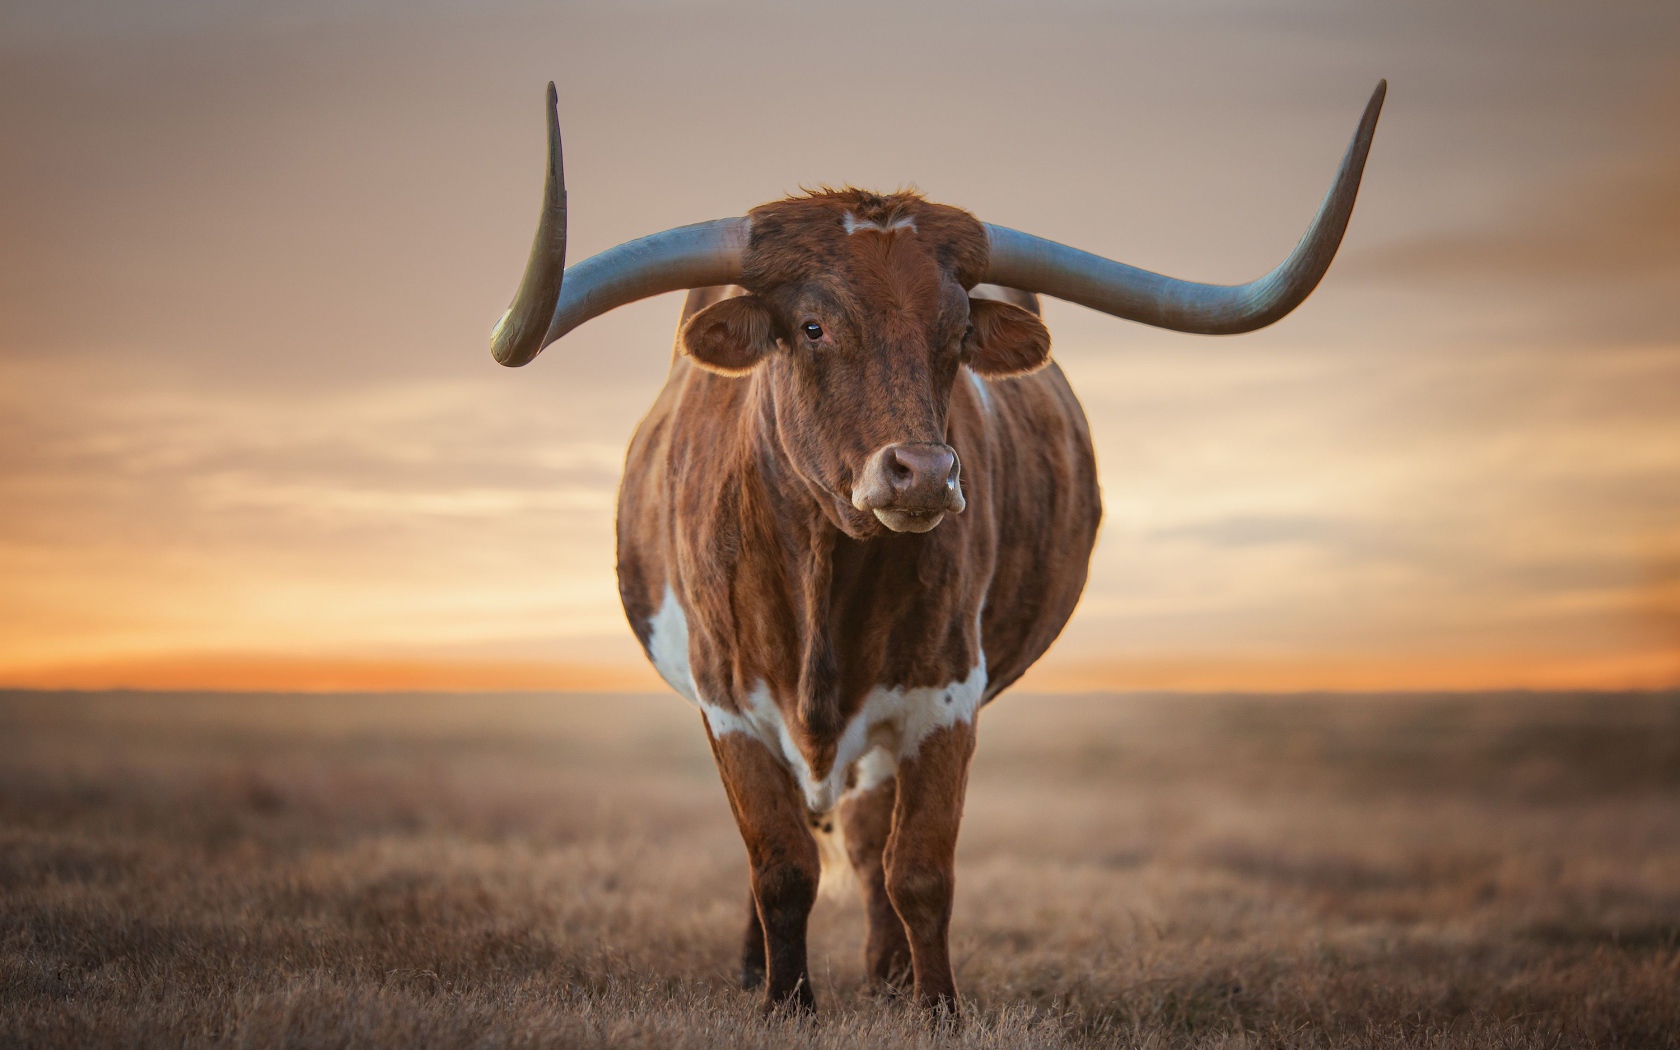 Beautiful bull with big horns